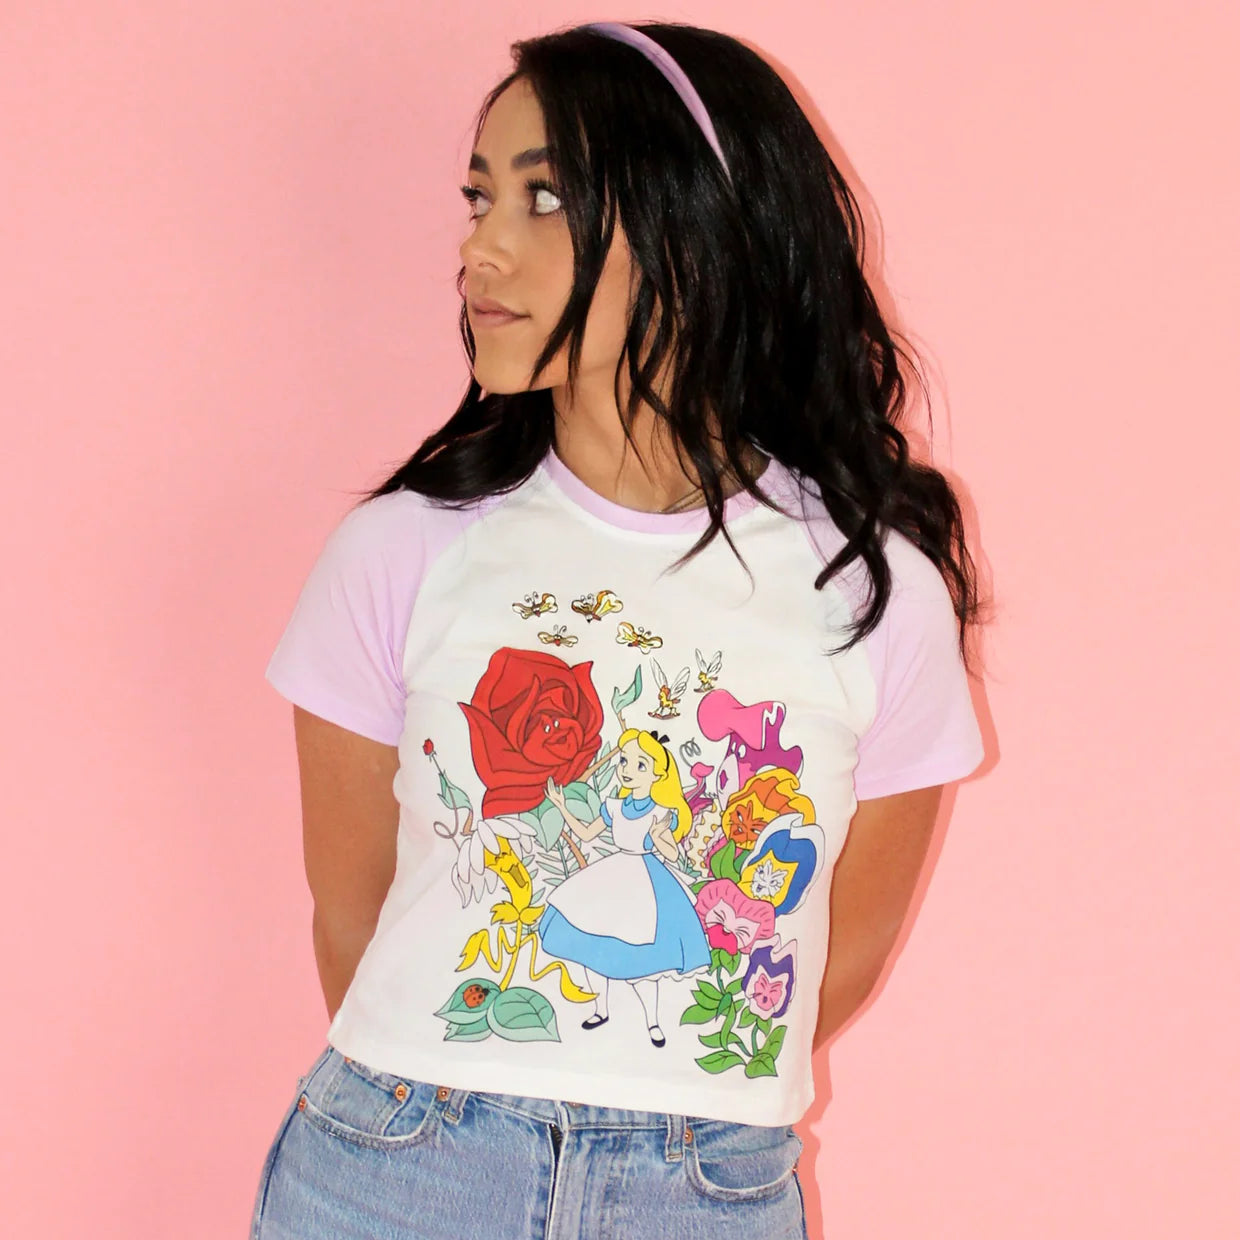 Alice in Wonderland (Disney) Floral Crop T-Shirt by Cakeworthy